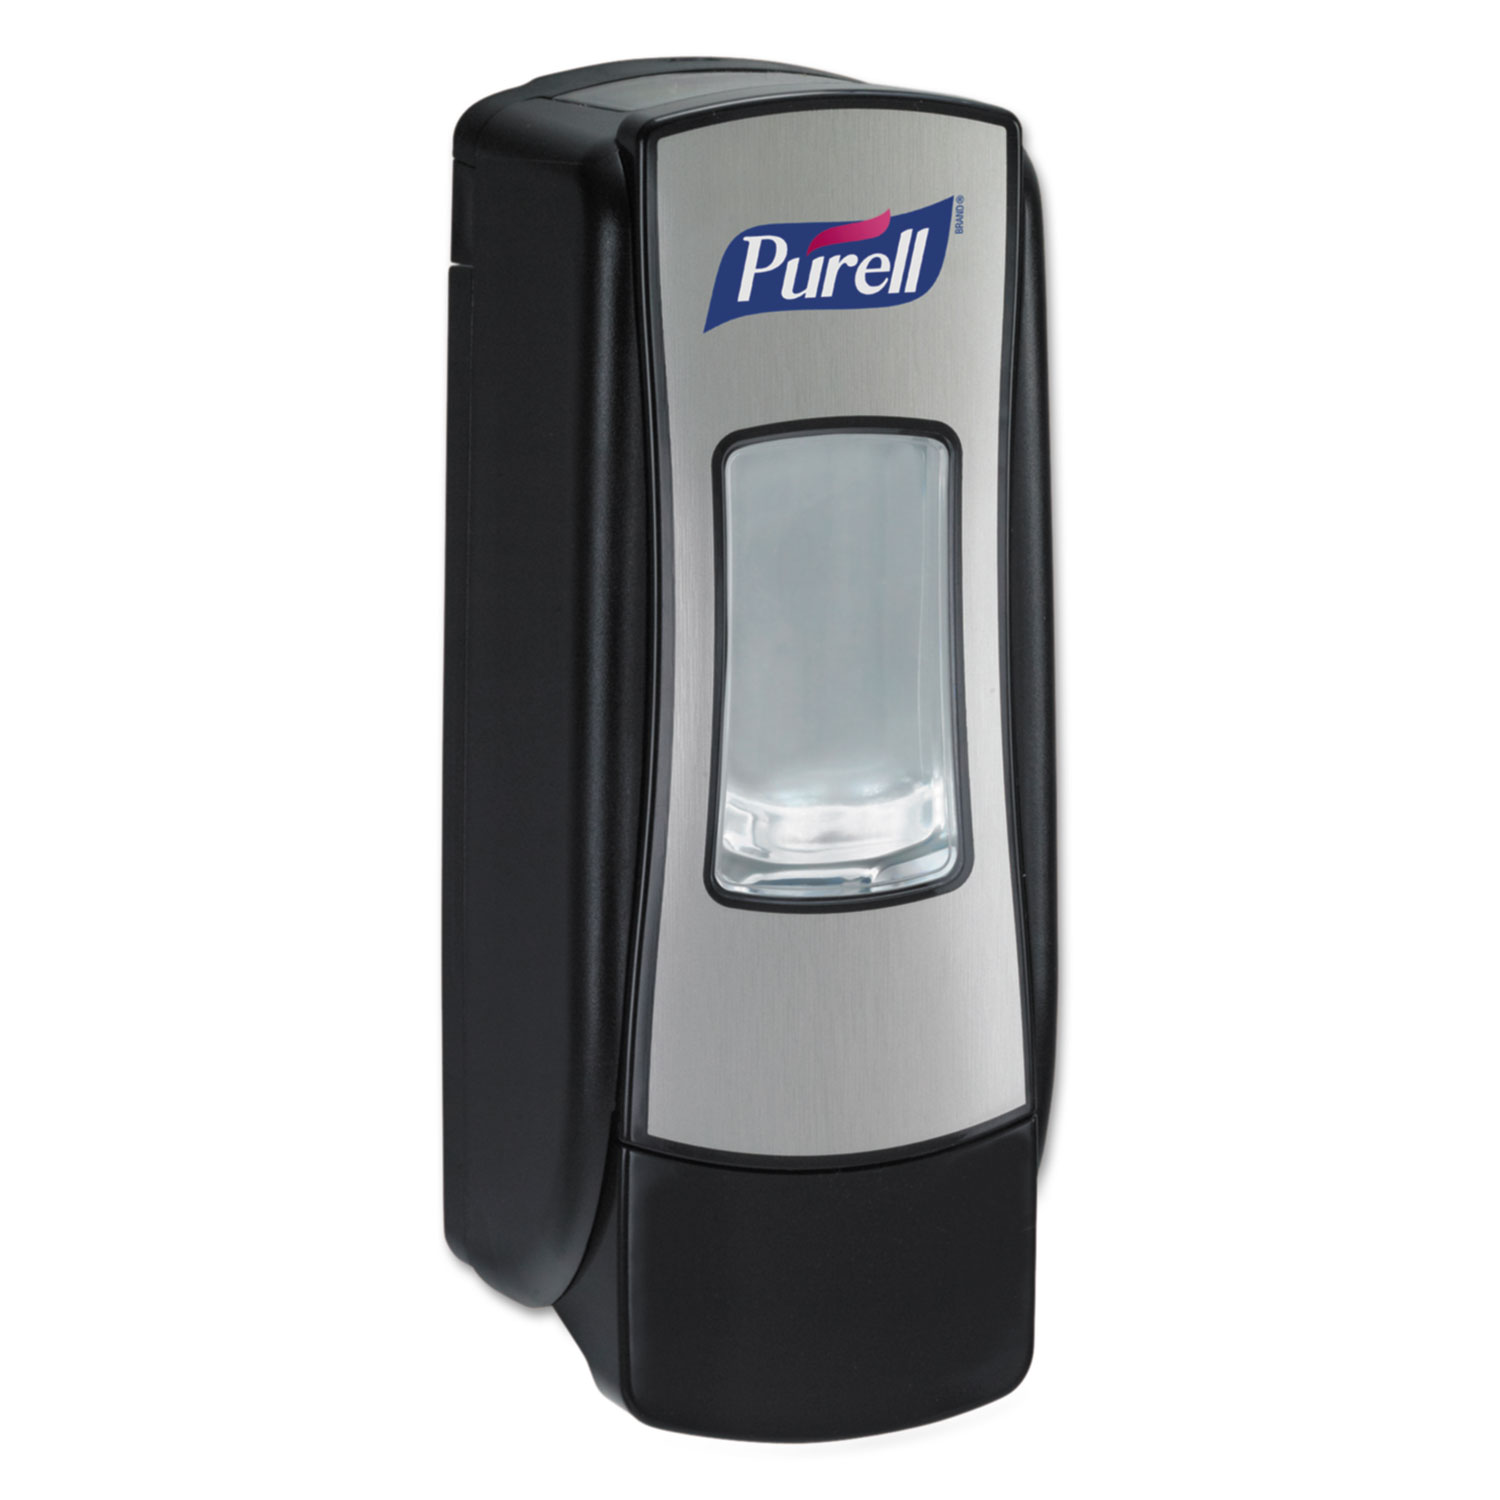  PURELL 8728-06 ADX-7 Dispenser, 700 mL, 3.75 x 3.5 x 9.75, Chrome/Black (GOJ872806) 